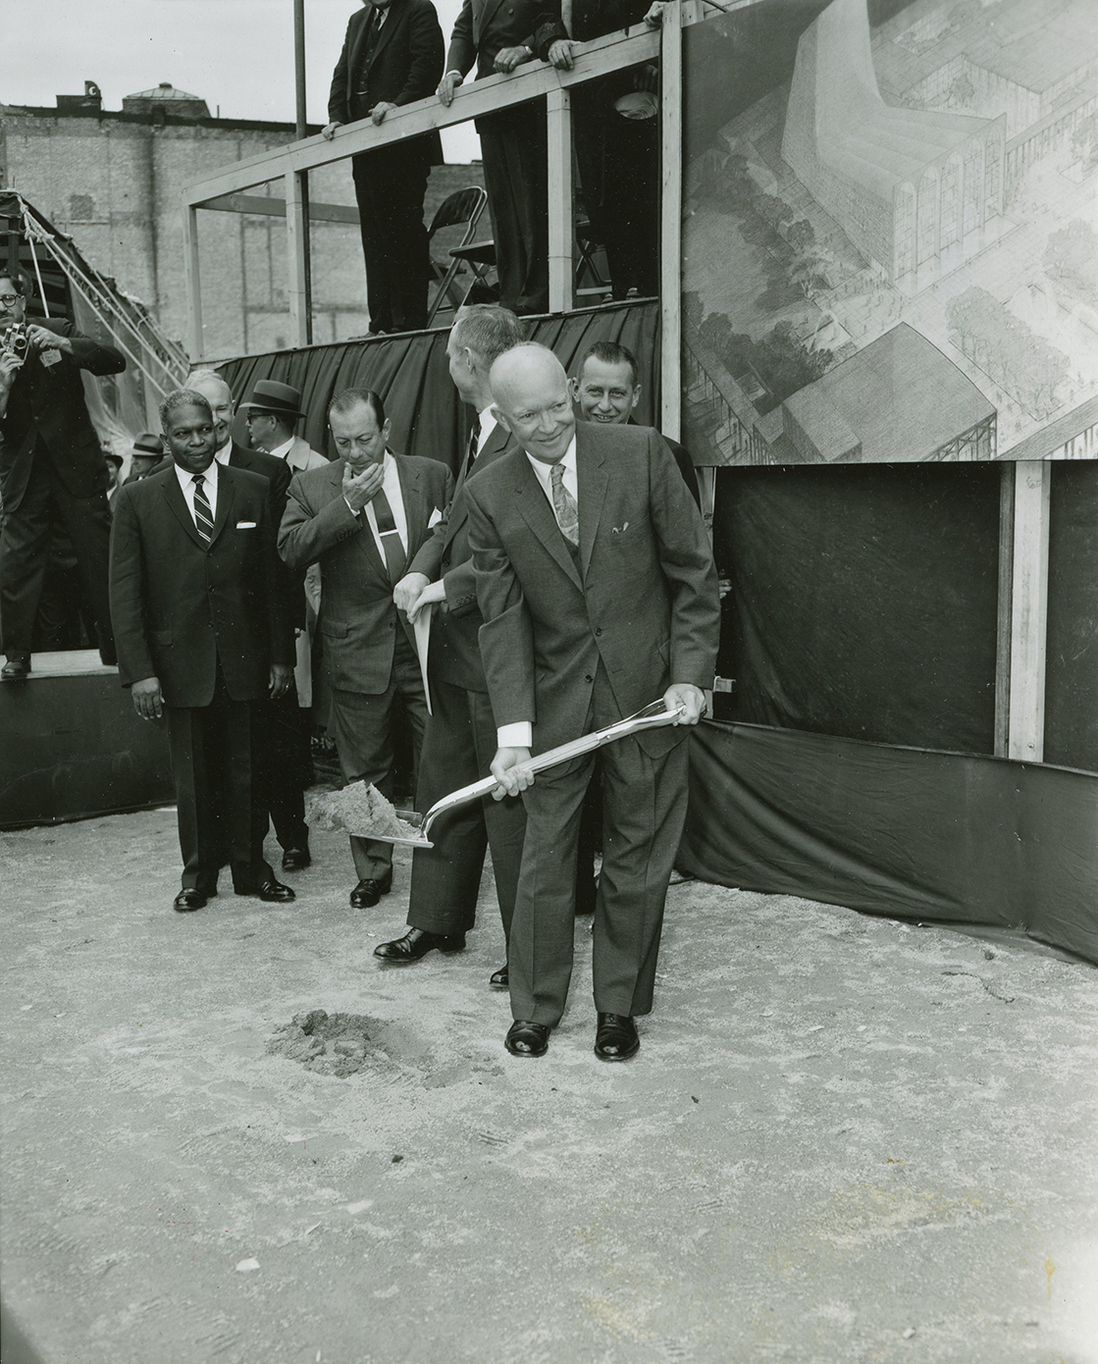 Eisenhower at 1959 Lincoln Center groundbreaking